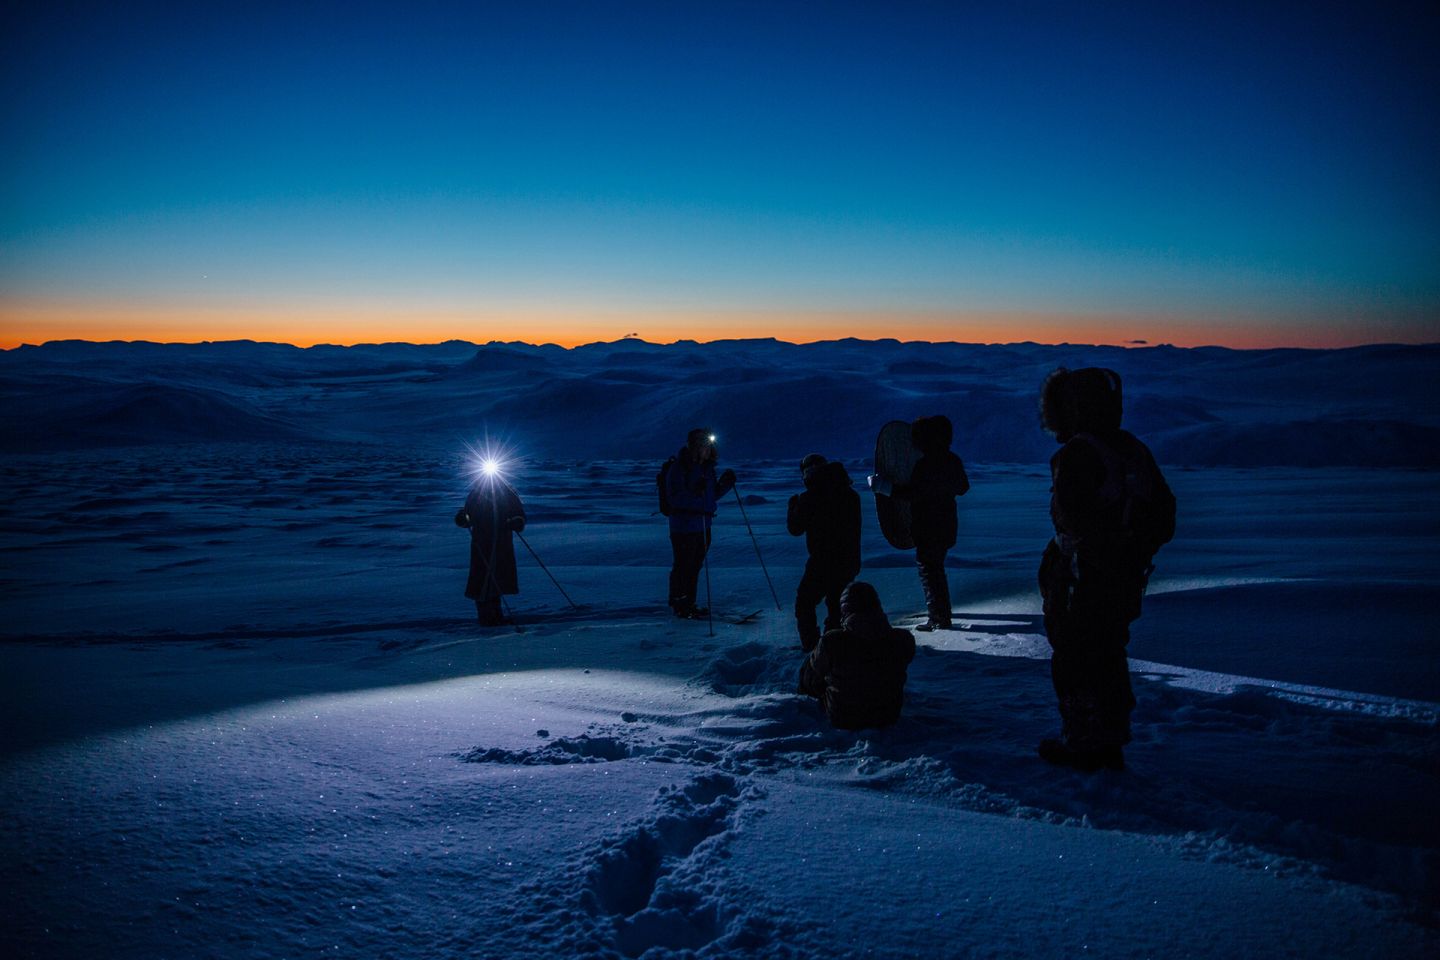 Filming during Polar Night